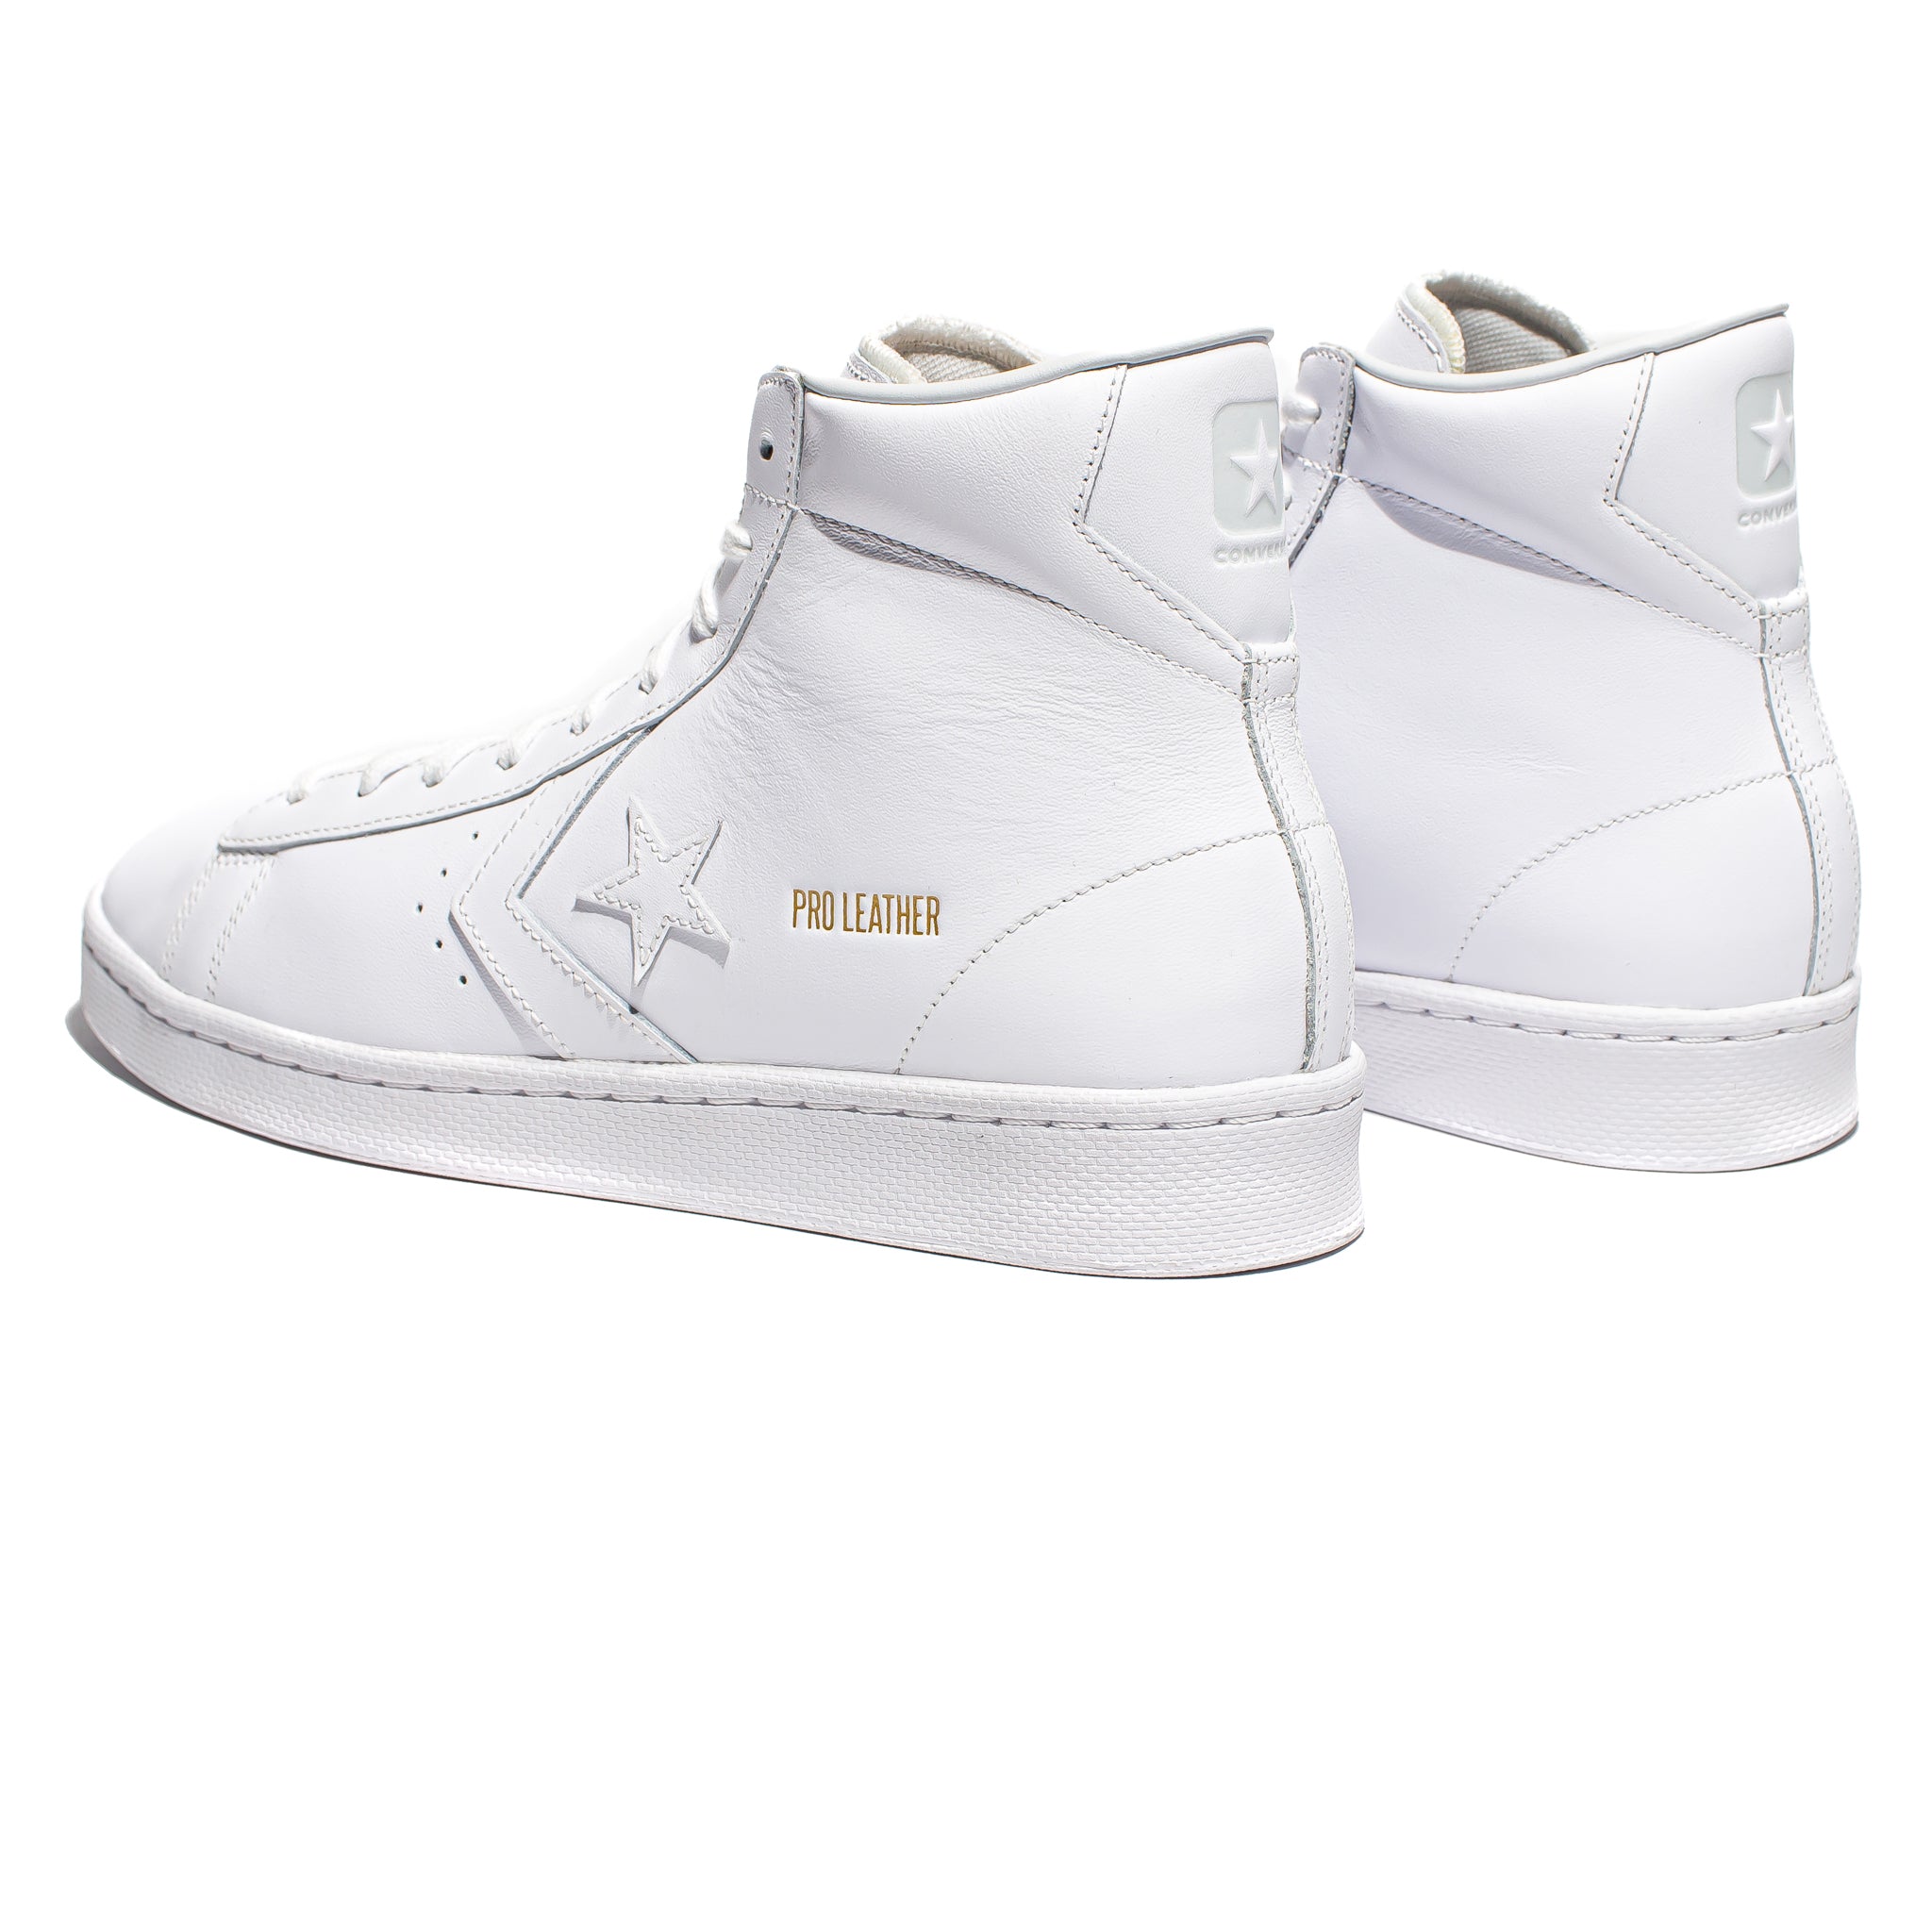 Converse Pro Leather Mid - White/White